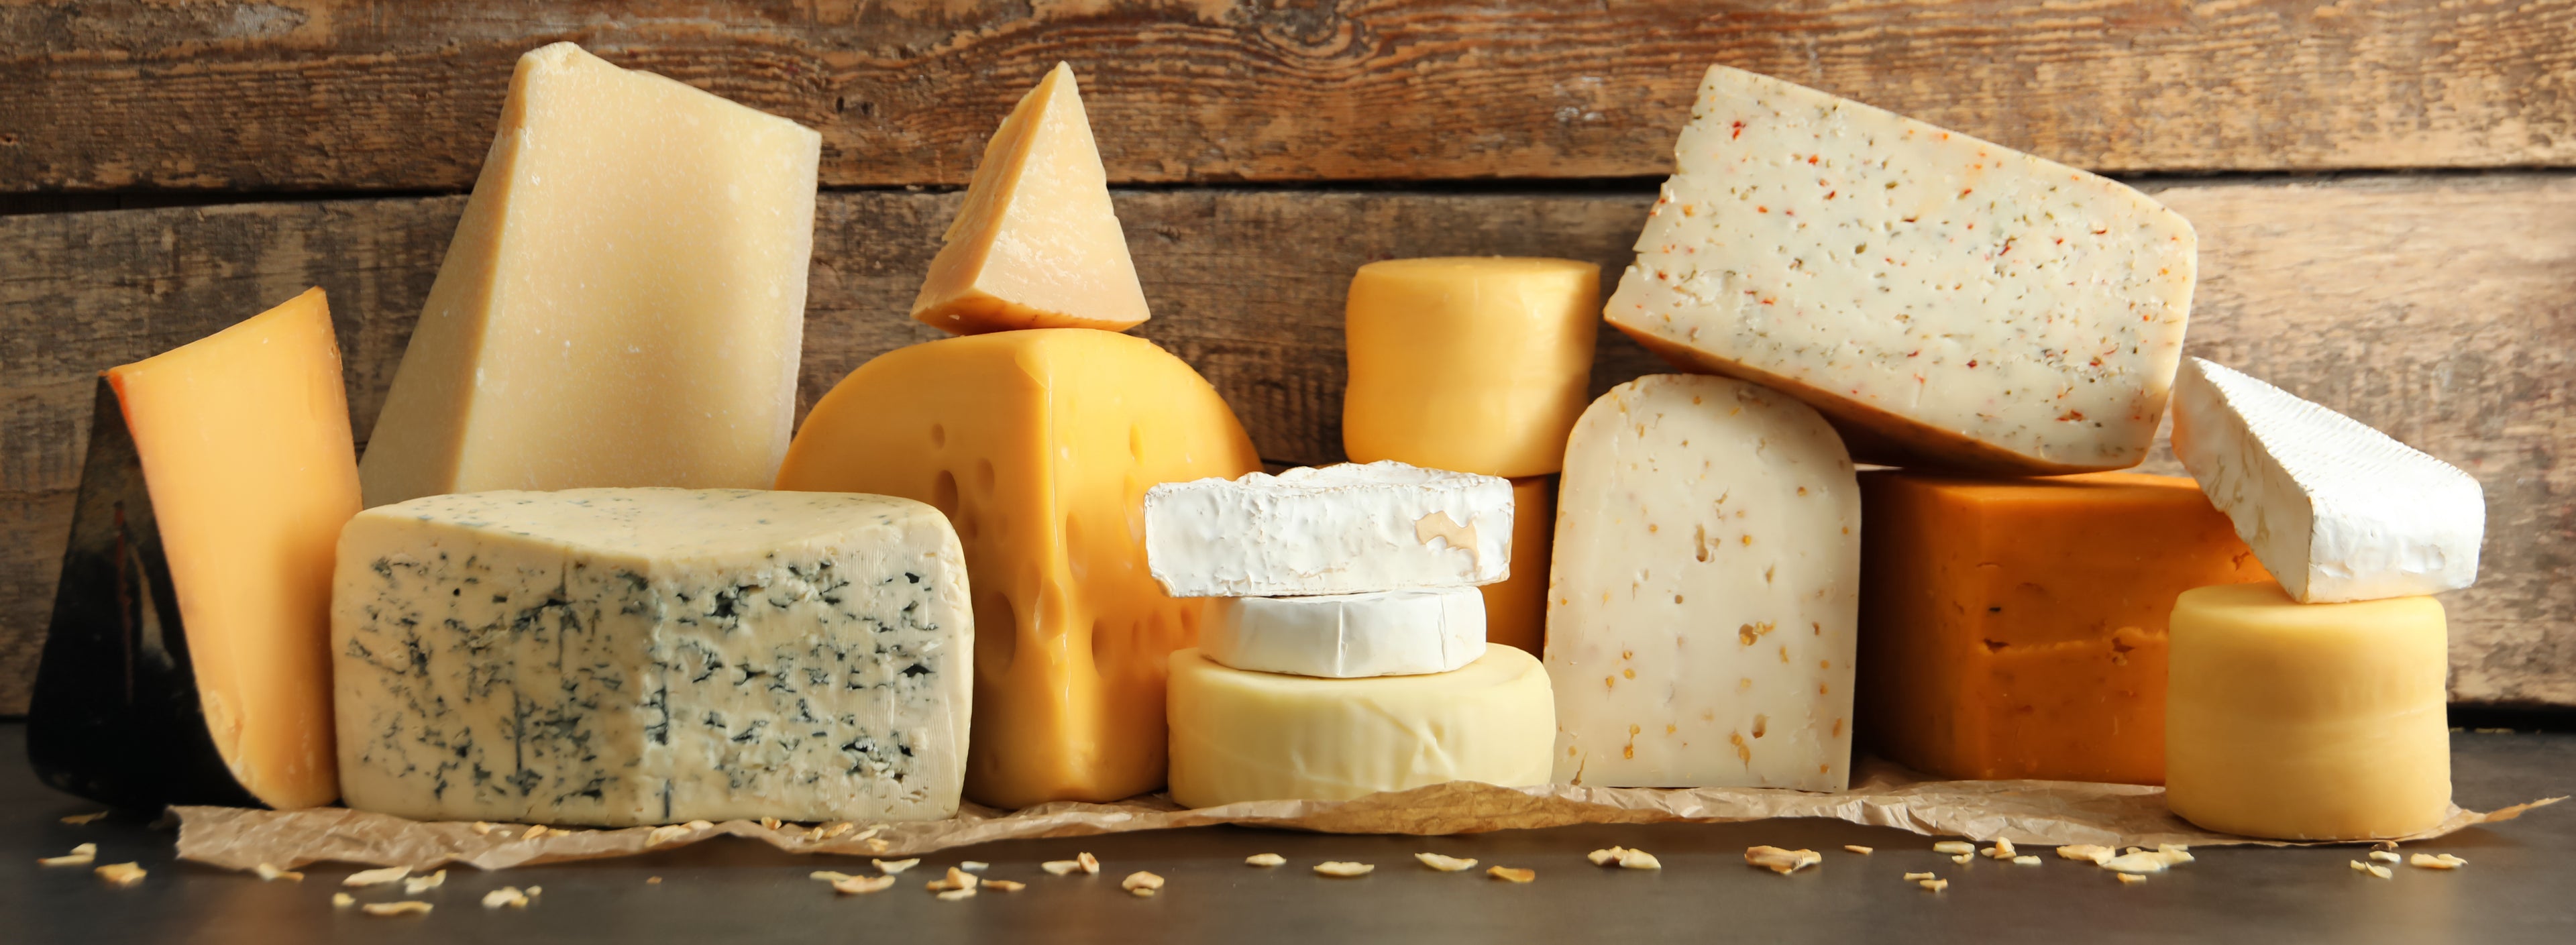 Antonelli's Cheese Wholesale ordering website – antonelliswholesale